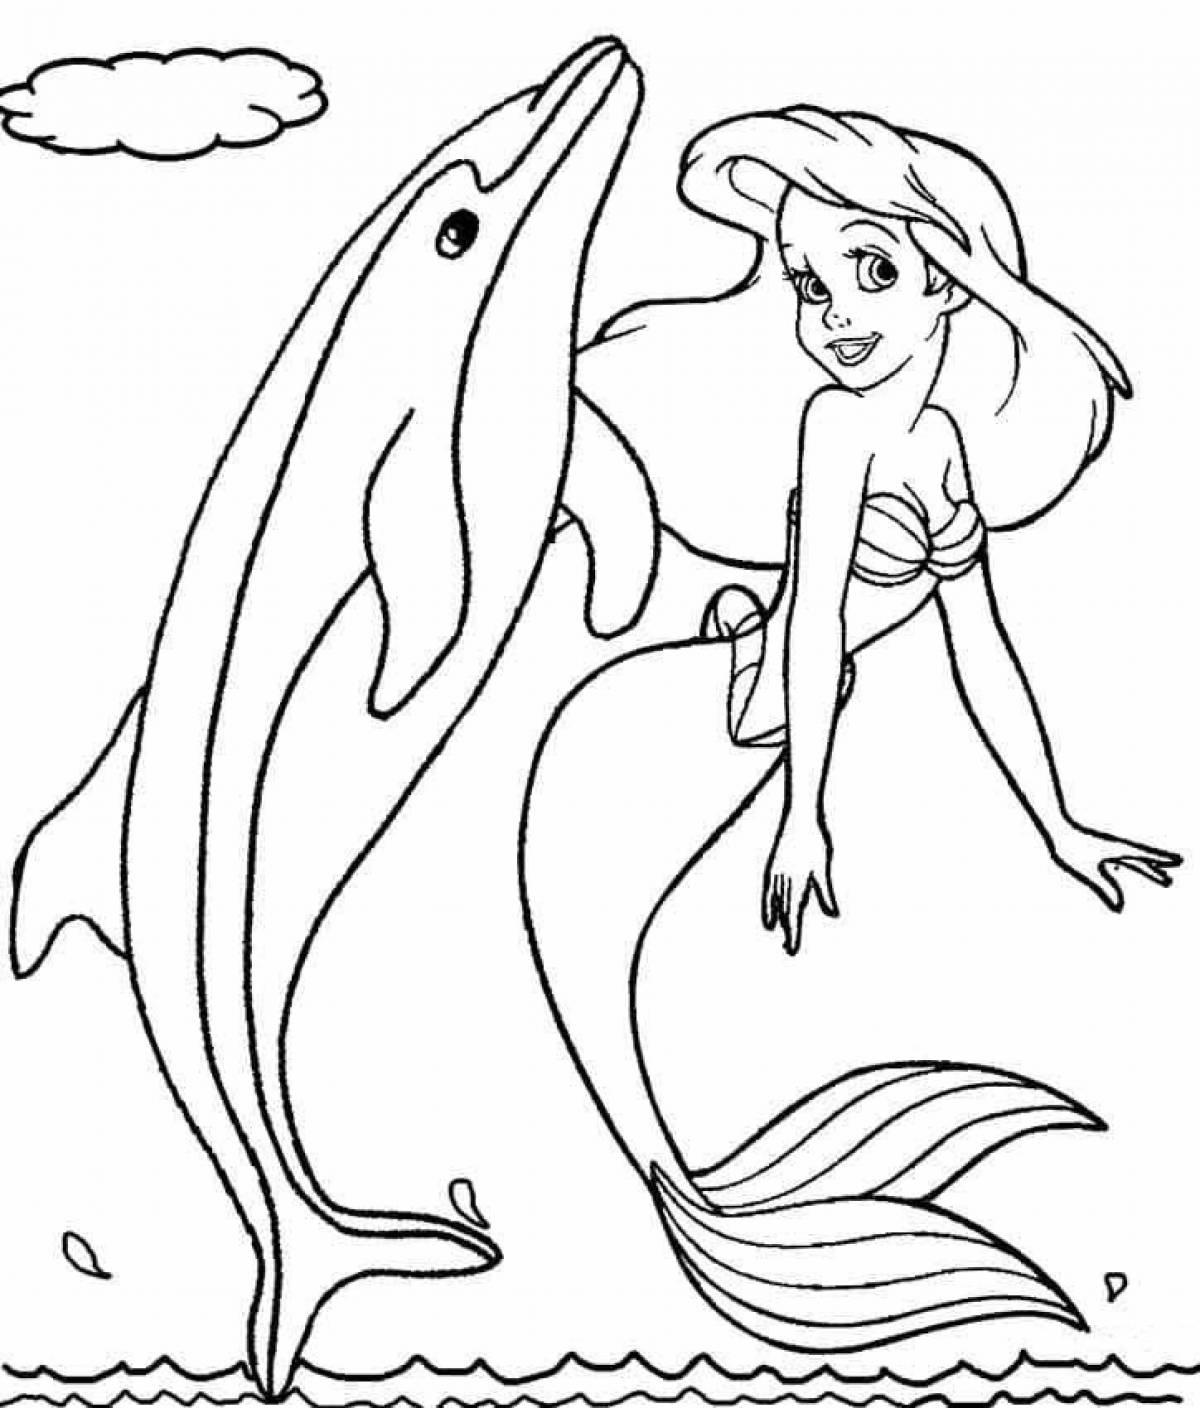 Mermaid hypnotic coloring book for kids